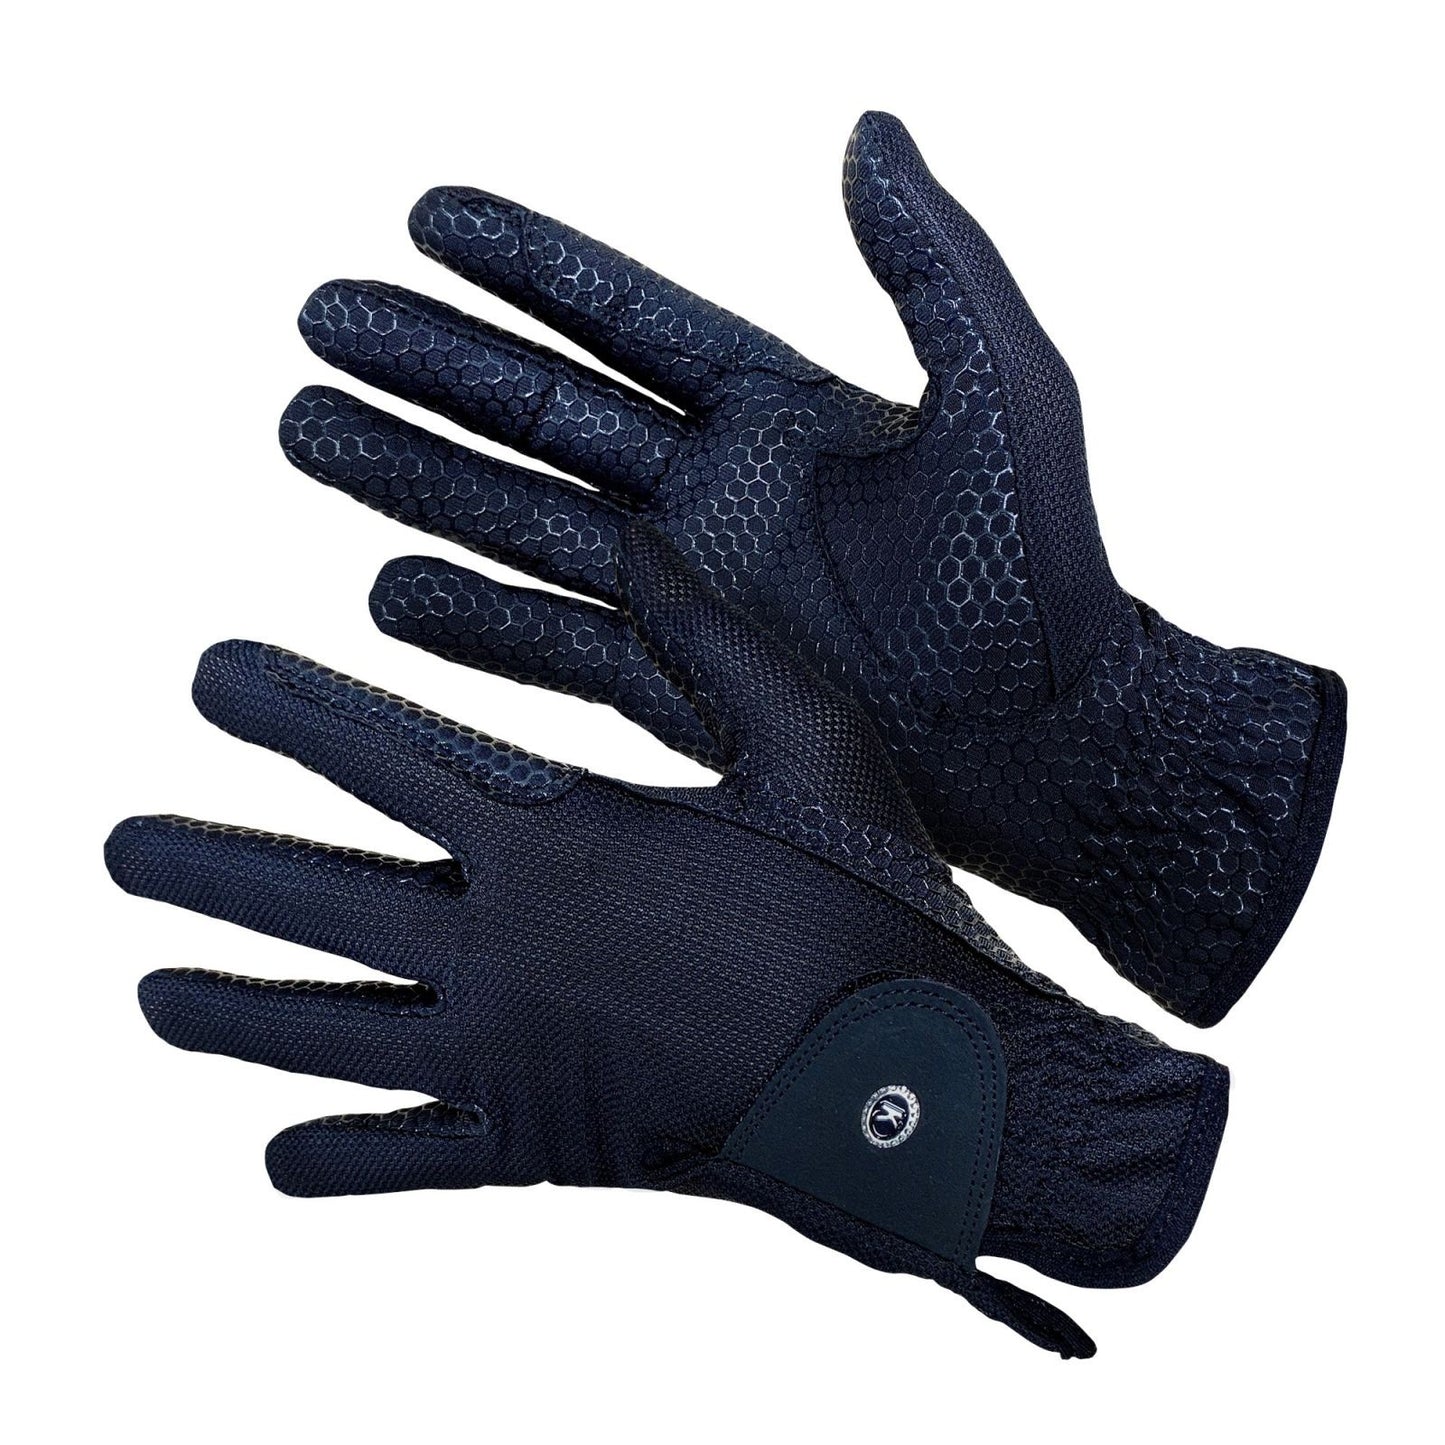 KM Silicone Grip Gloves